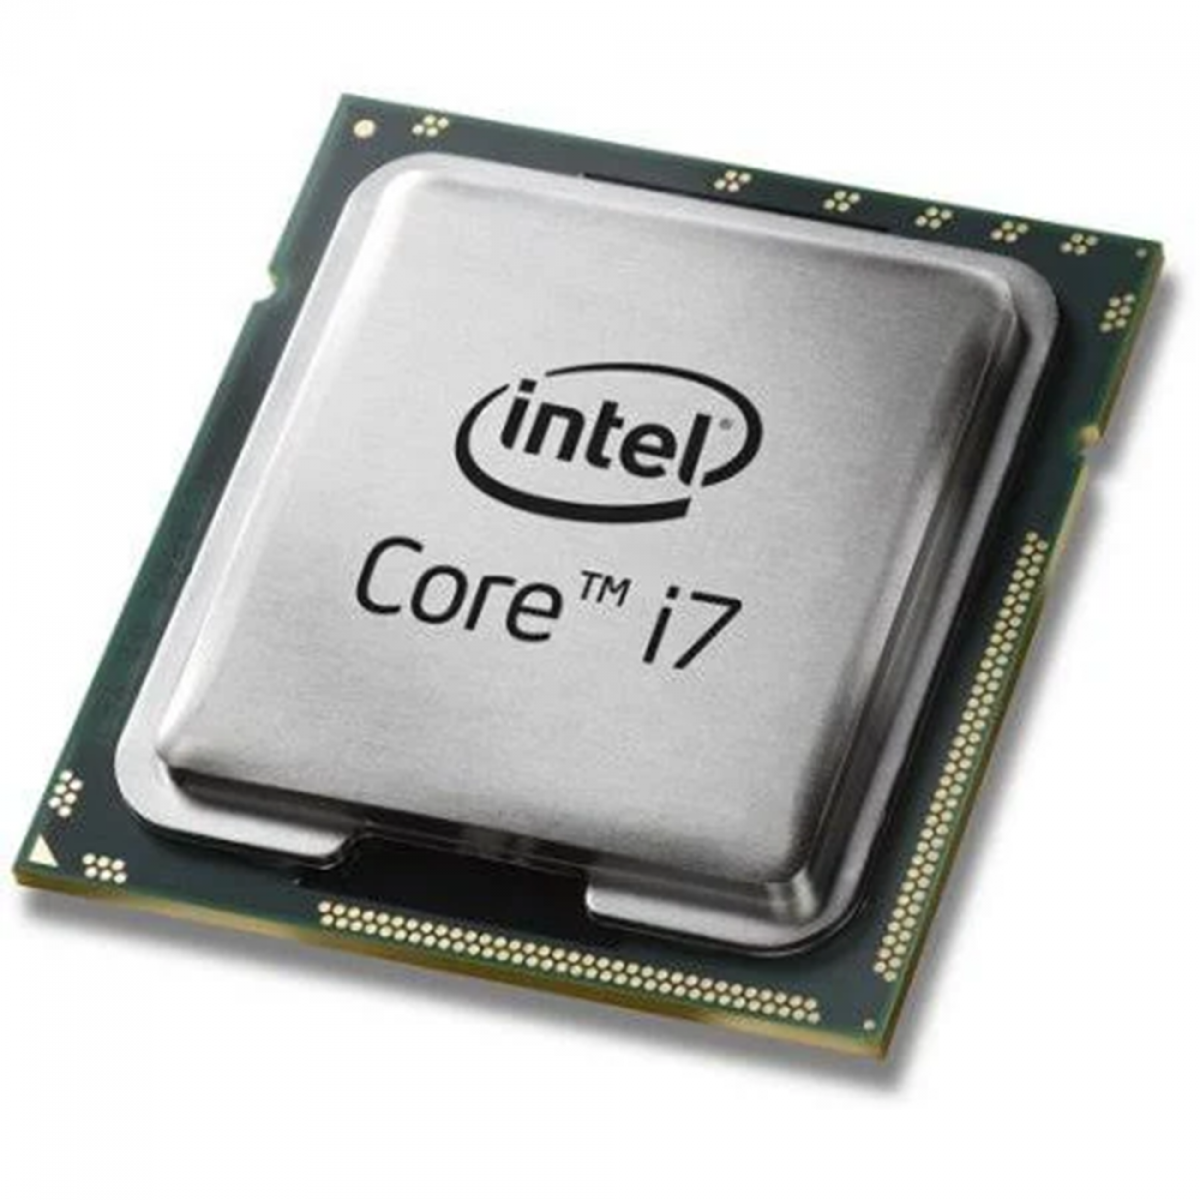 Processador Intel Core i7 2600 3.40GHz, 8MB, 2ª Geração, LGA 1155 Quad Core, OEM